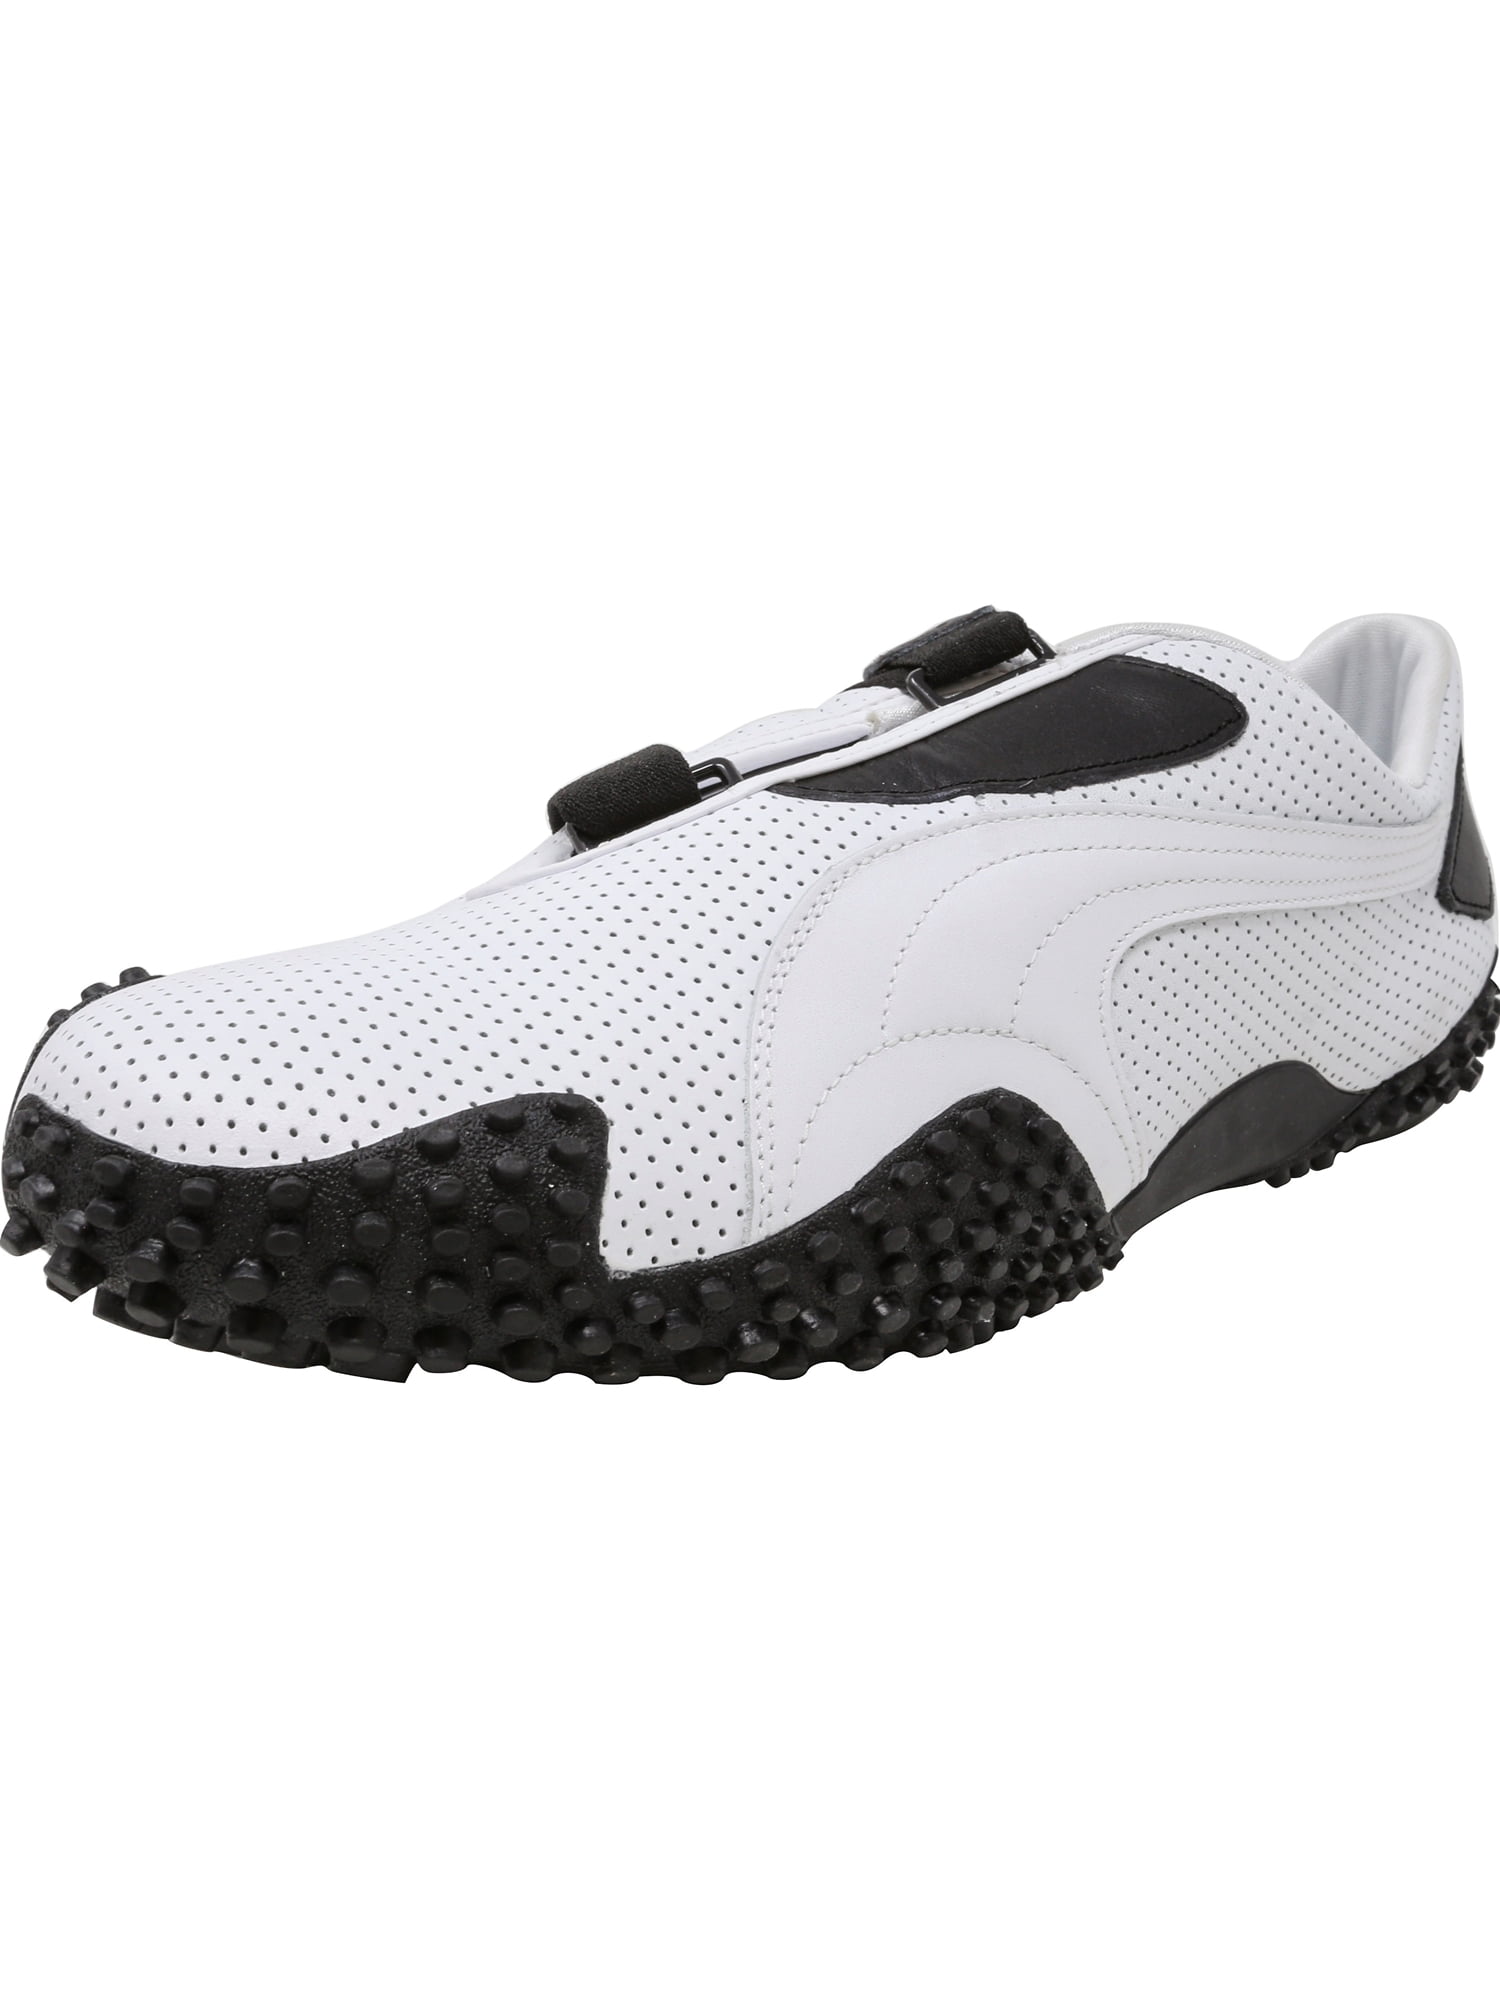 Rocío Escribe email equivocado Puma Men's Mostro Perforated White / Black Ankle-High Running Shoe - 11.5M  - Walmart.com